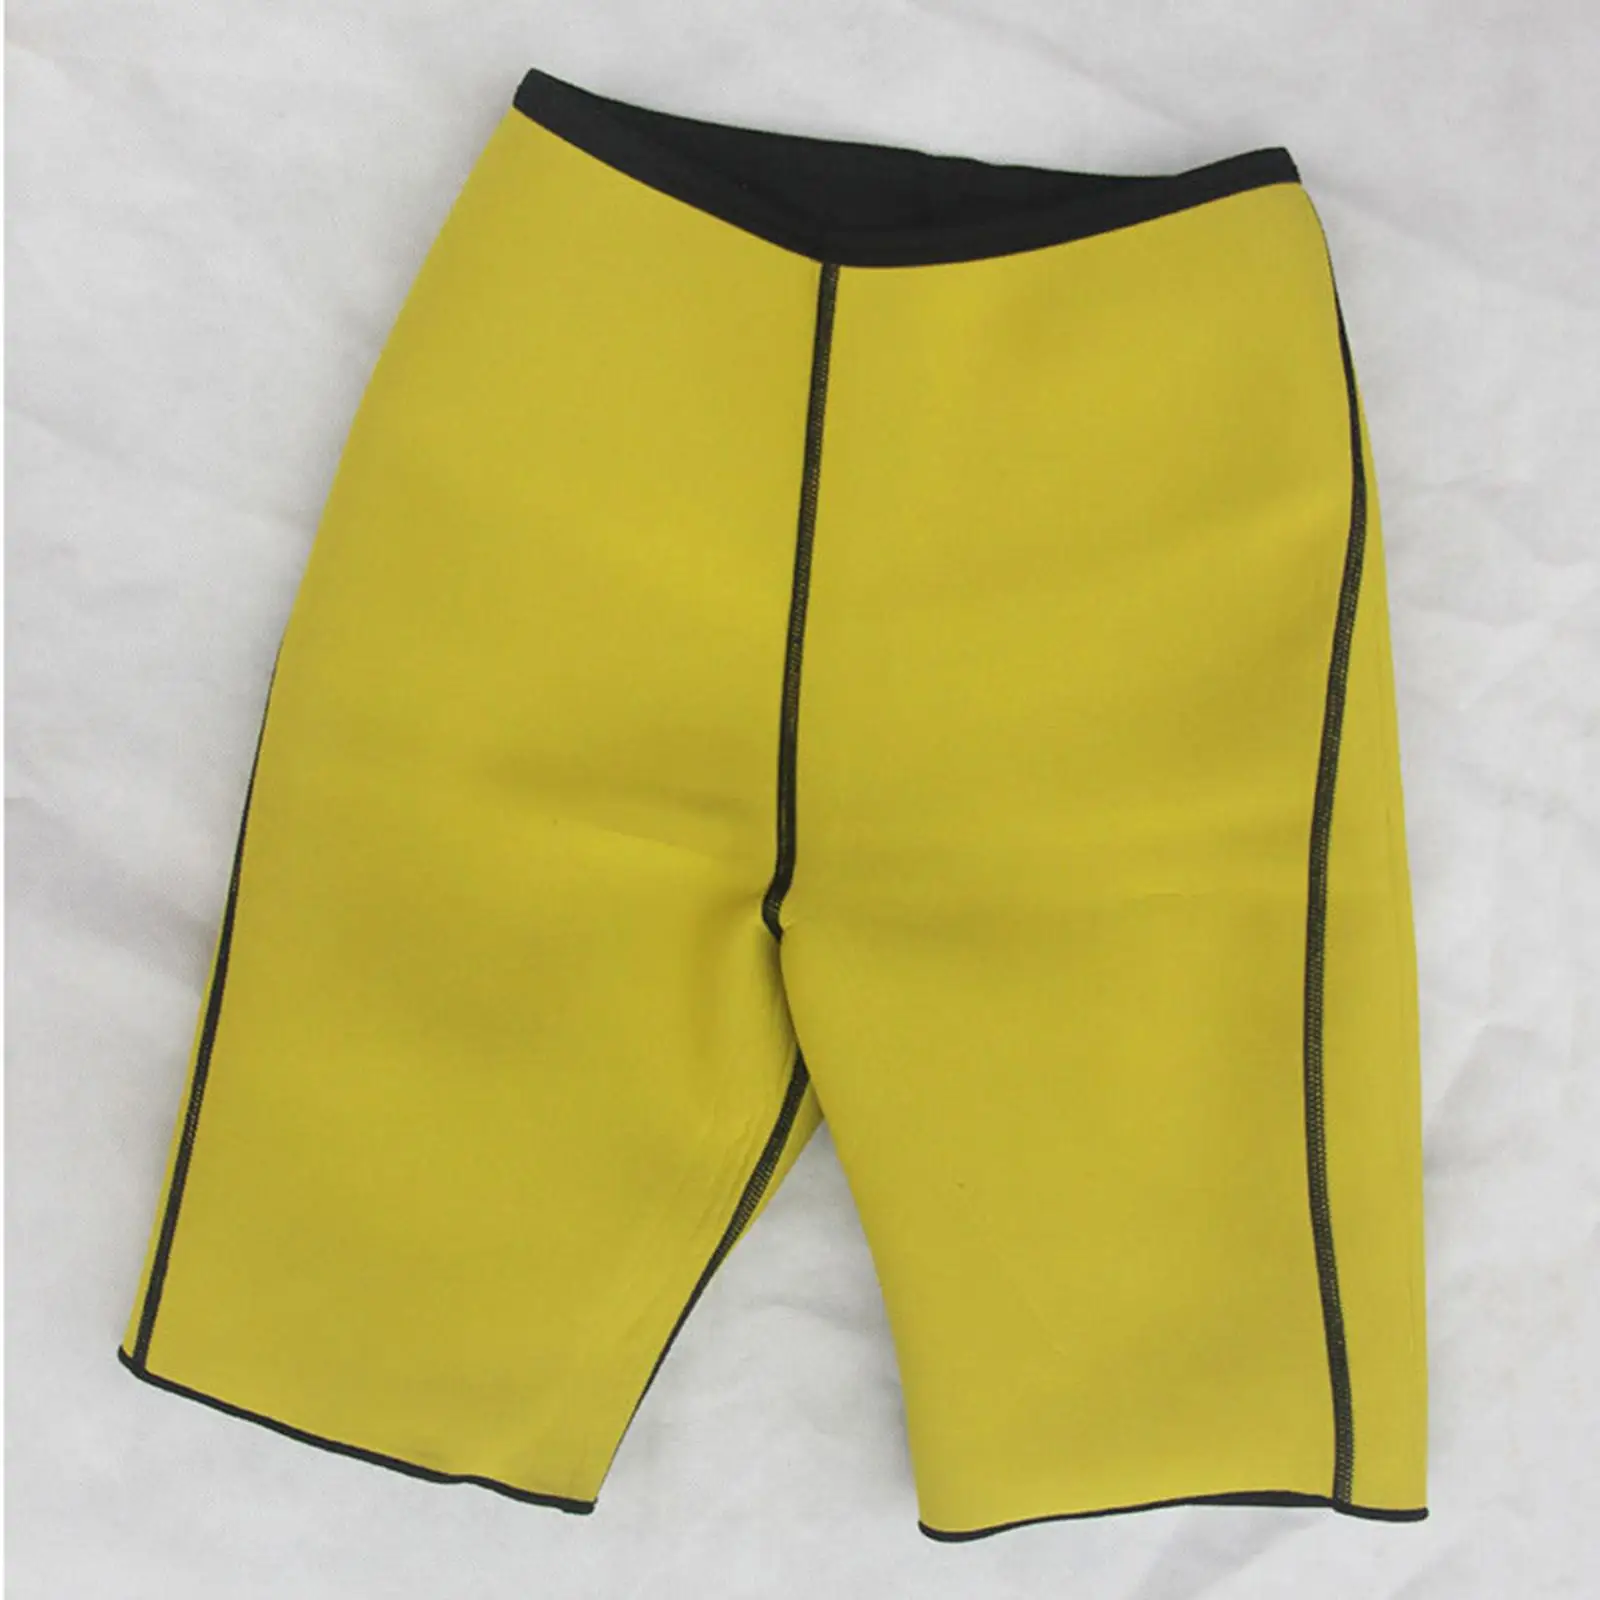 Wetsuit Shorts Men Premium 3mm Neoprene Shorts Scuba Diving Surfing Canoeing Kayaking Swimming Suits